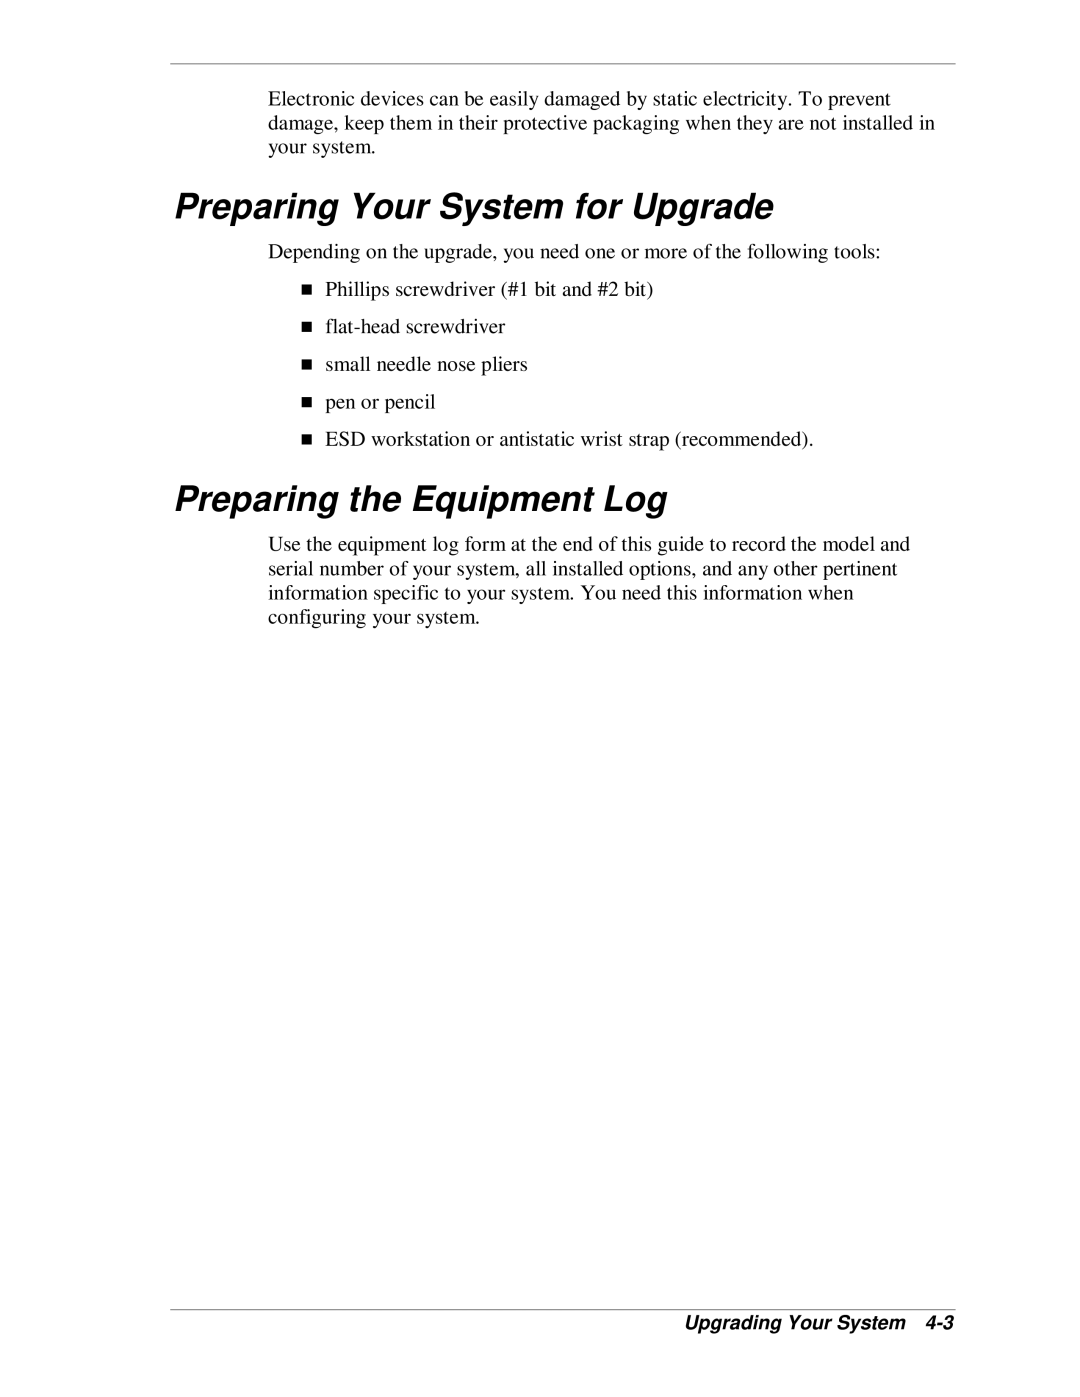 NEC MH4500 manual Preparing Your System for Upgrade, Preparing the Equipment Log 